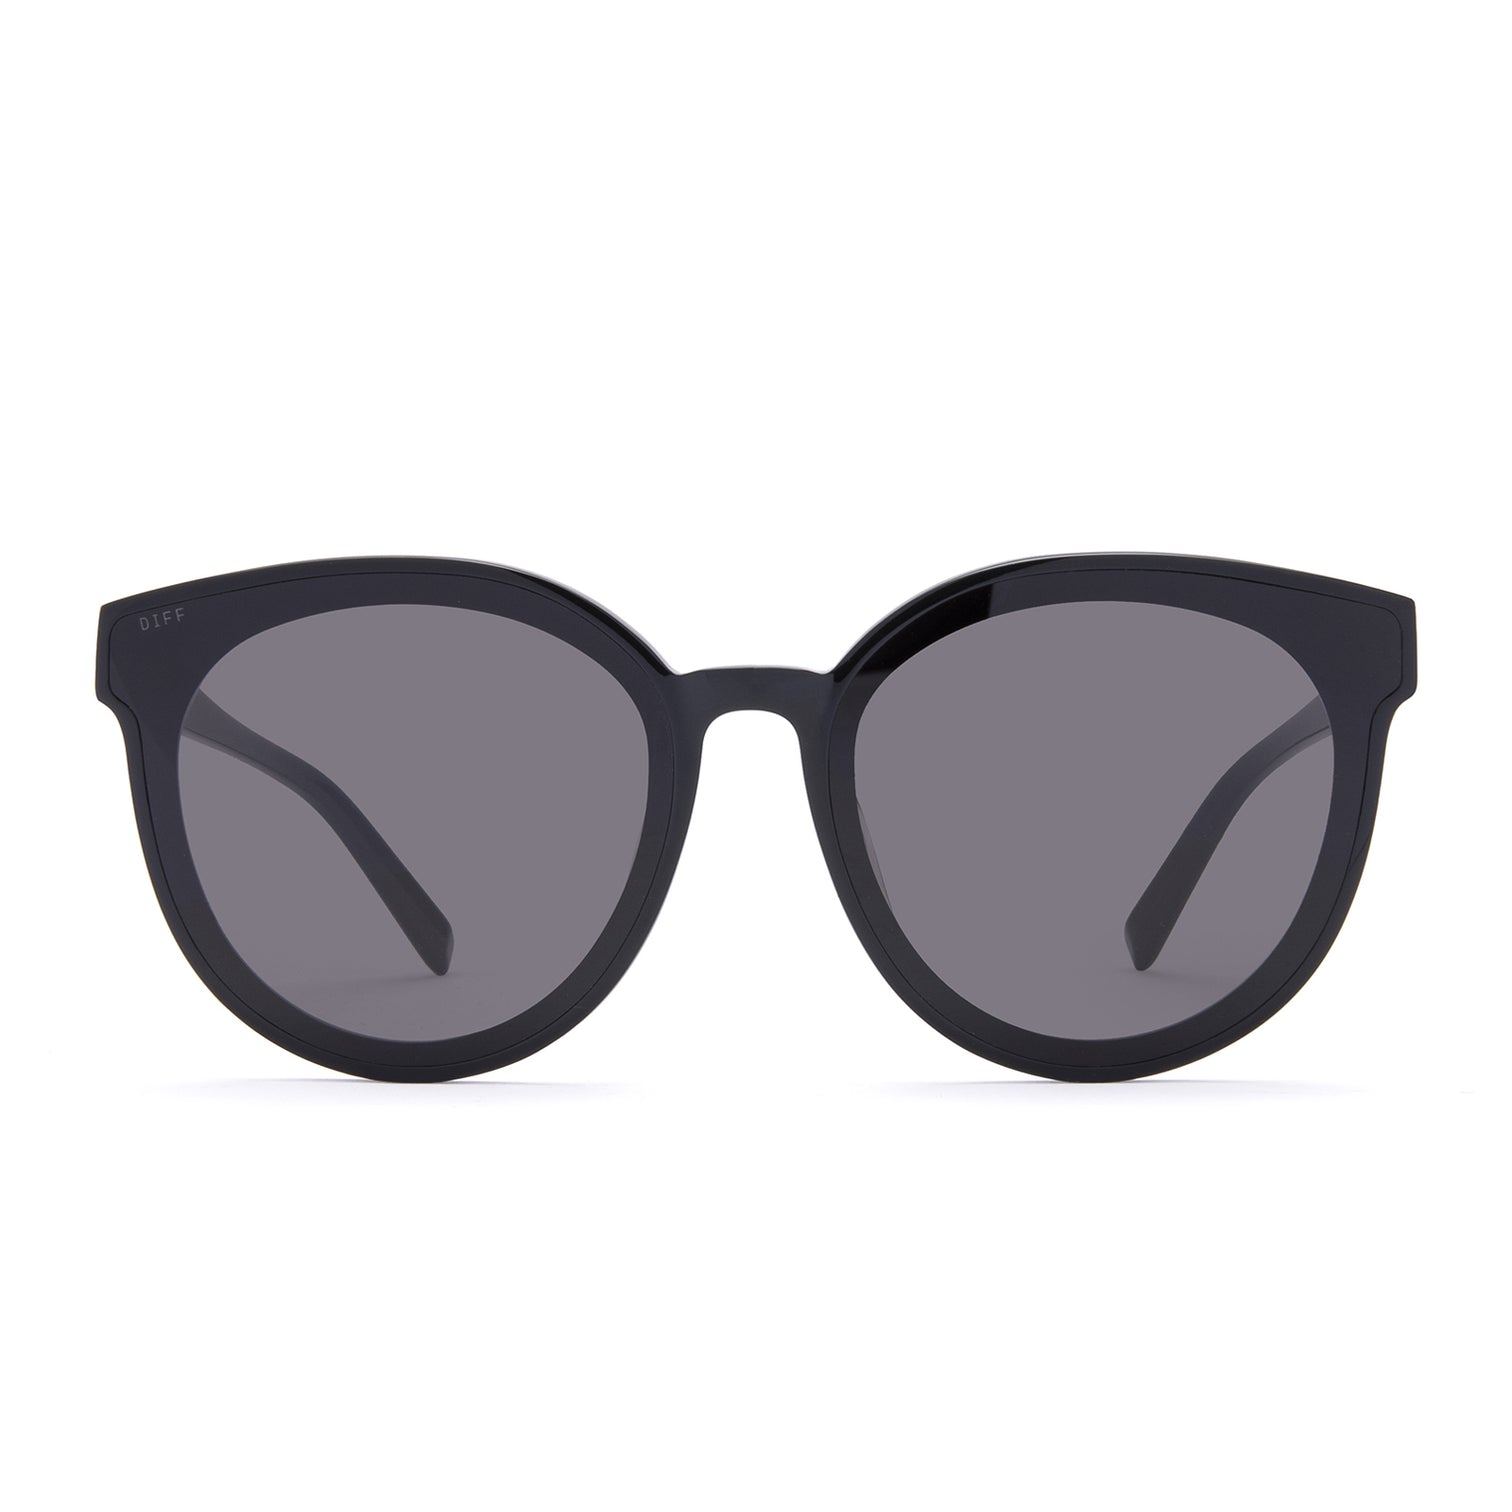 Gemma Round Sunglasses | Black & Solid Grey Lenses | DIFF Eyewear